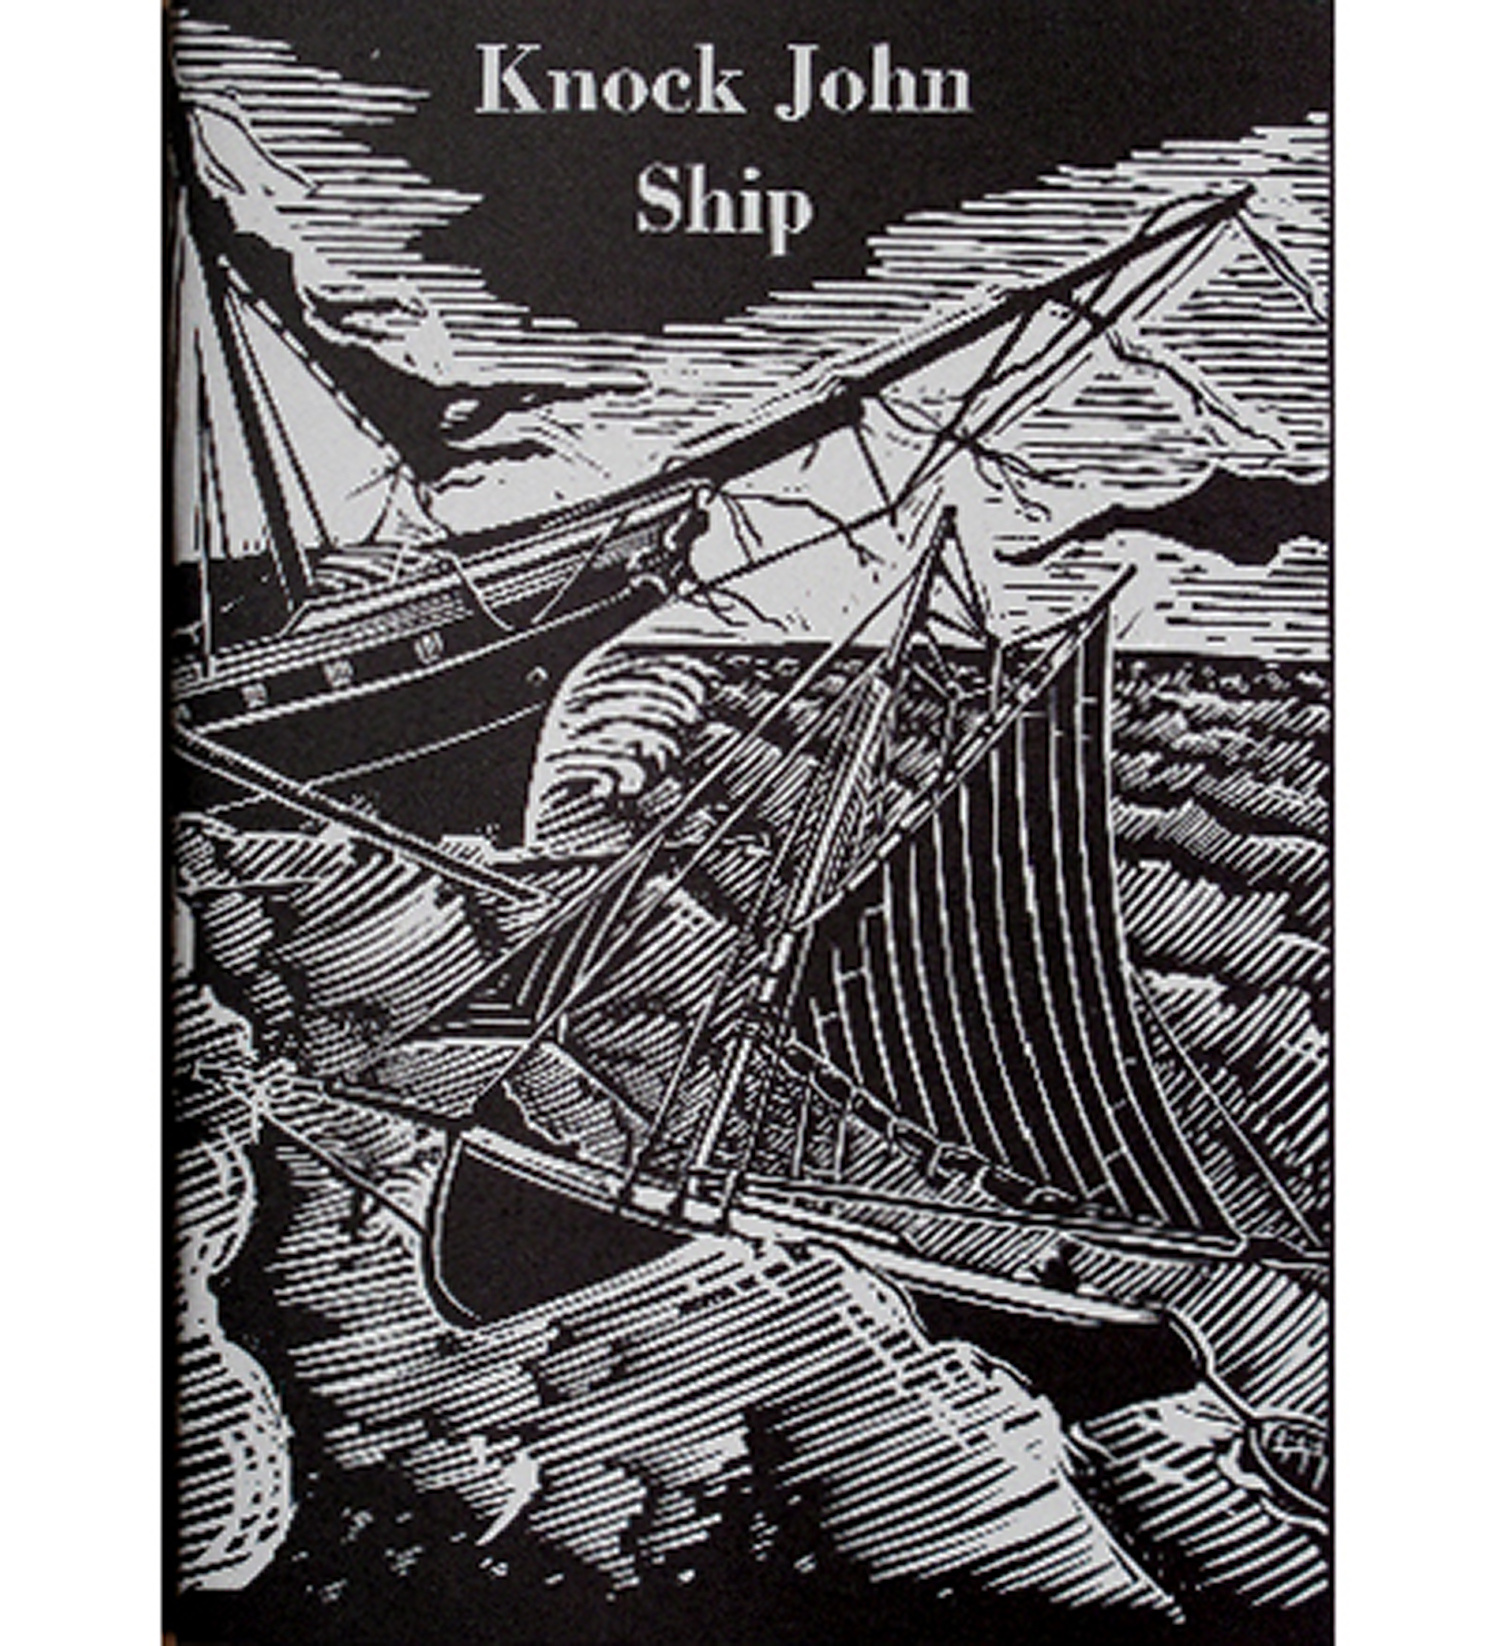 Knock John Ship by James Dodds